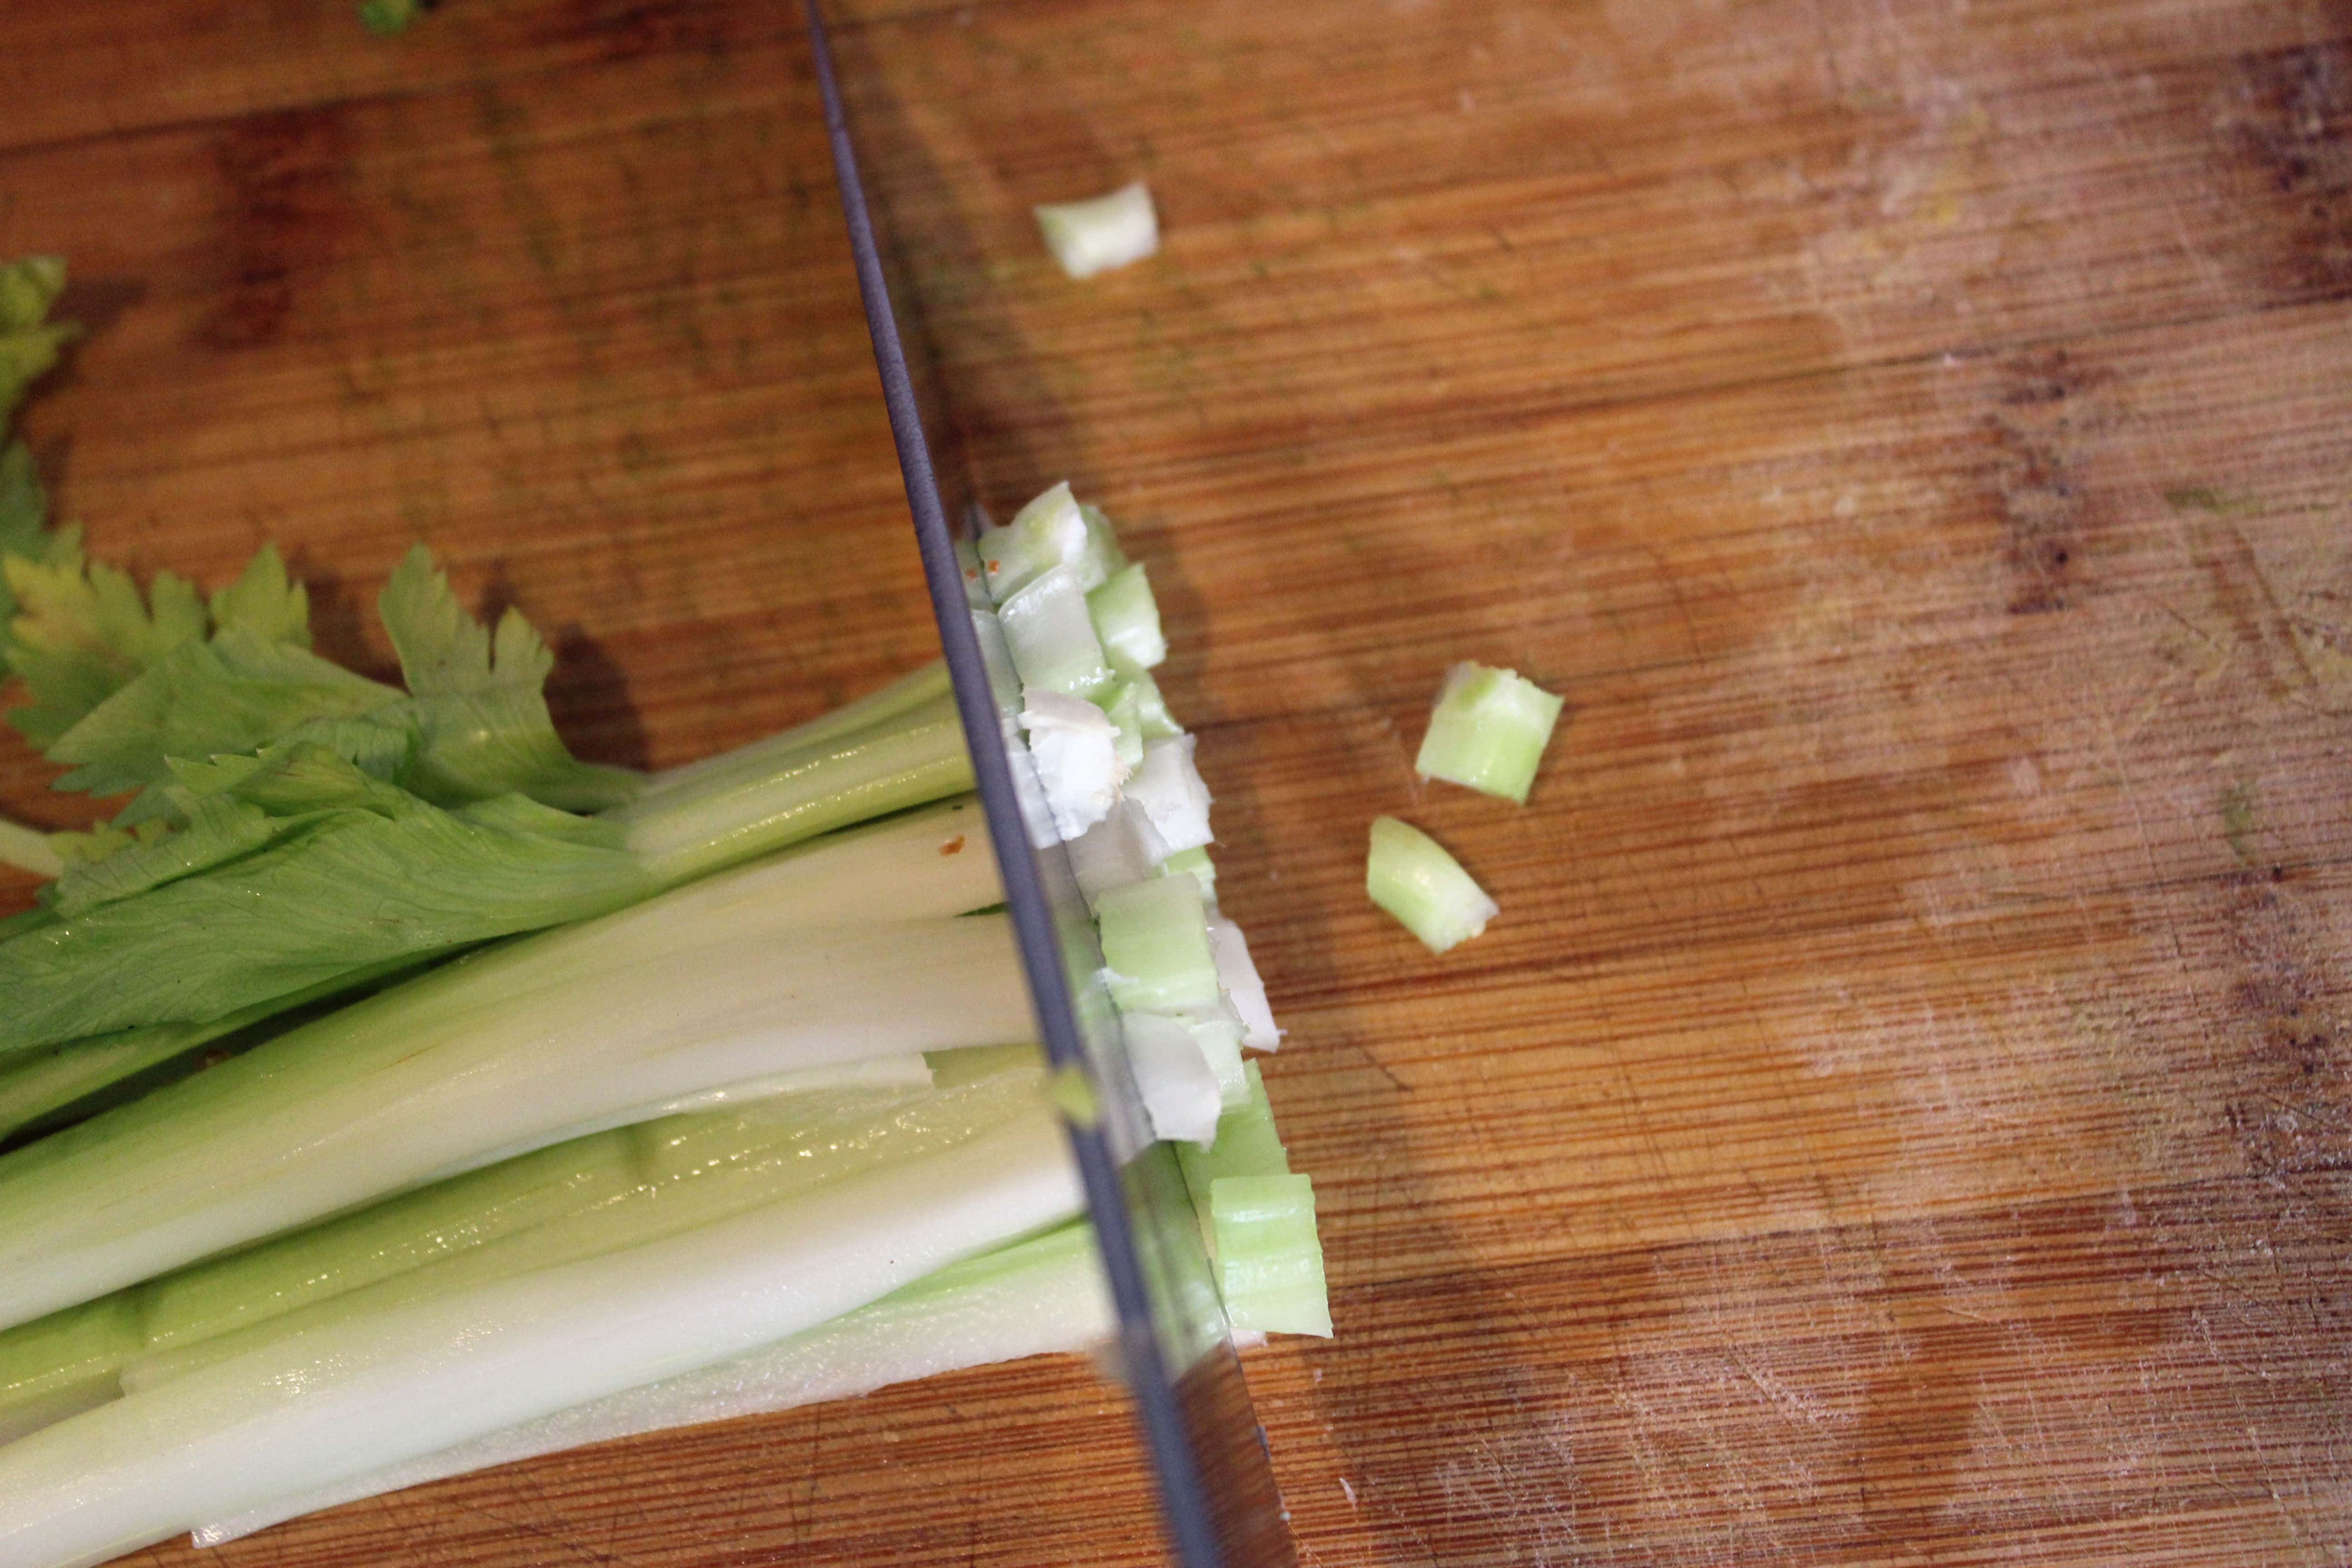 Chop celery stalks